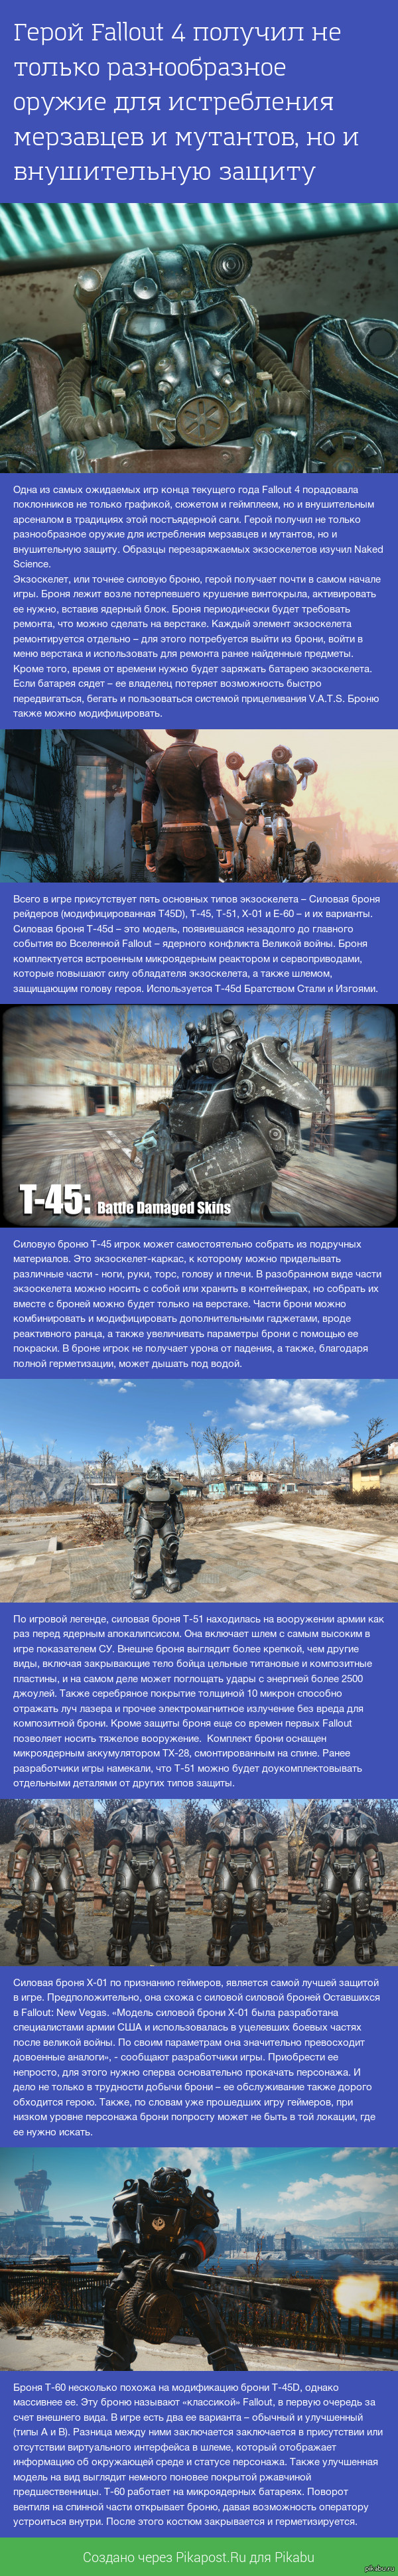  :     Fallout 4 - https://www.youtube.com/watch?v=FZ21GDiwSf4